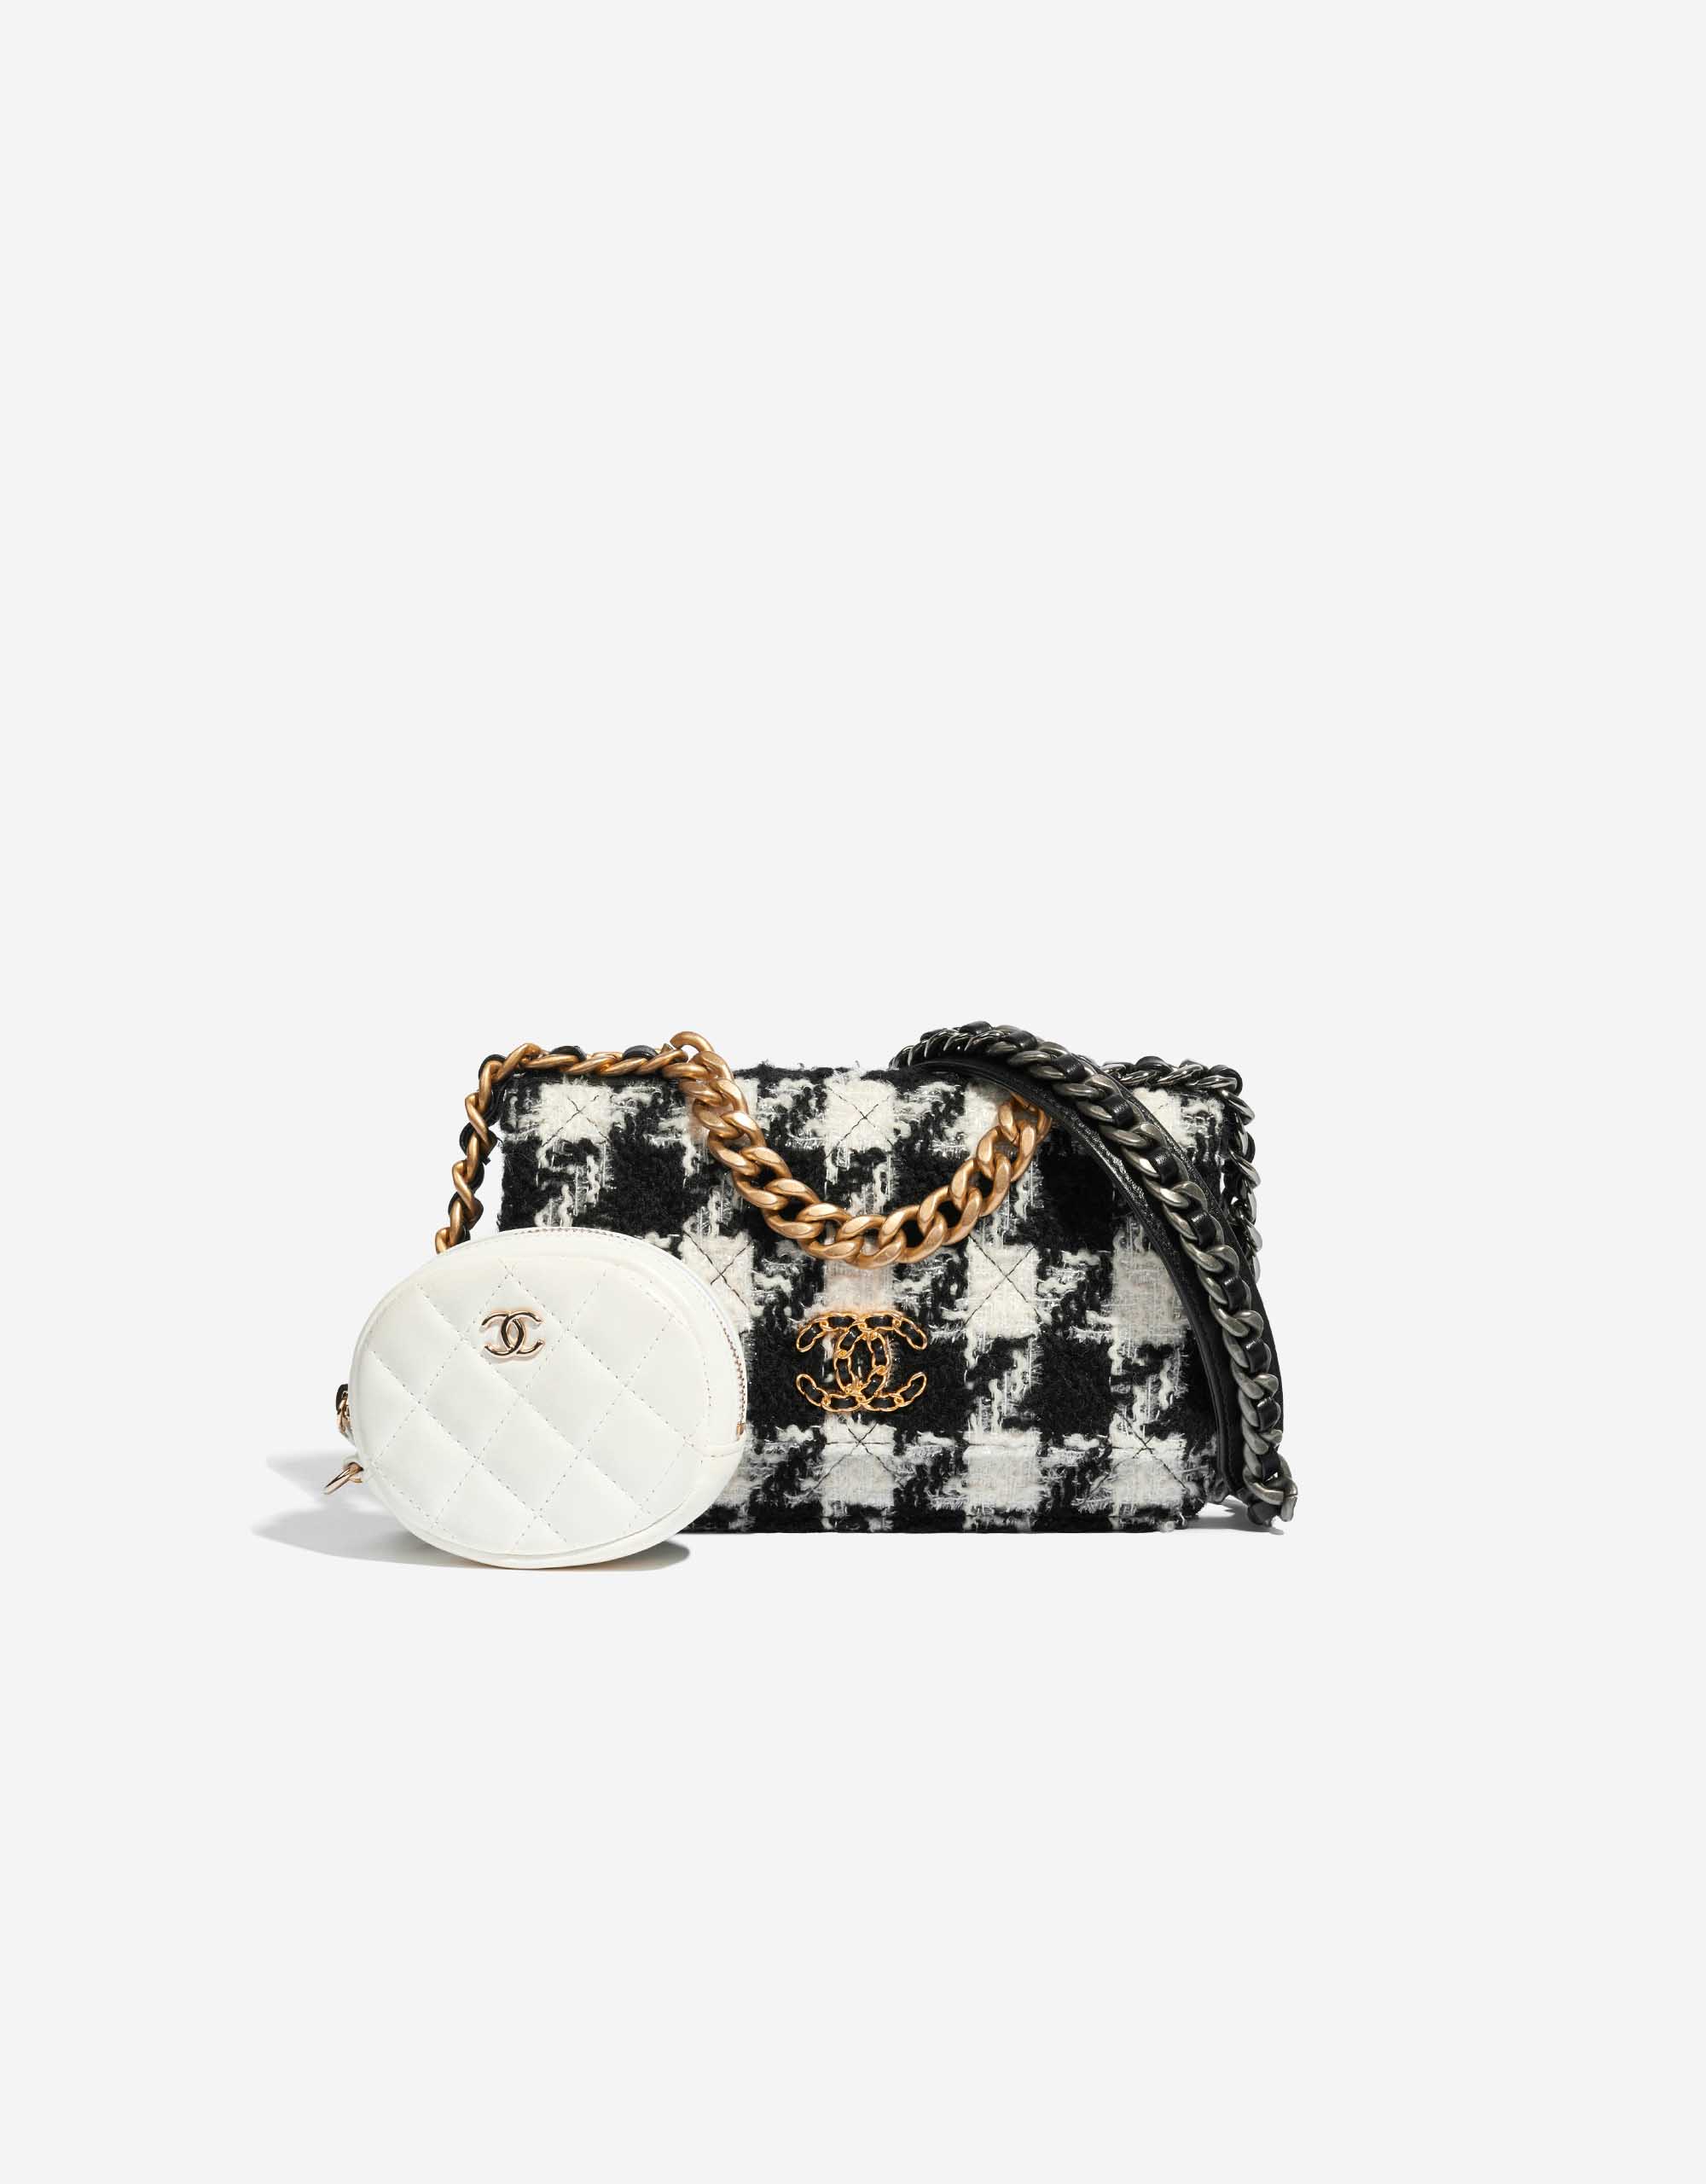 New Chanel 19 Bag Handbag Light Grey Neutral Tweed Discontinued